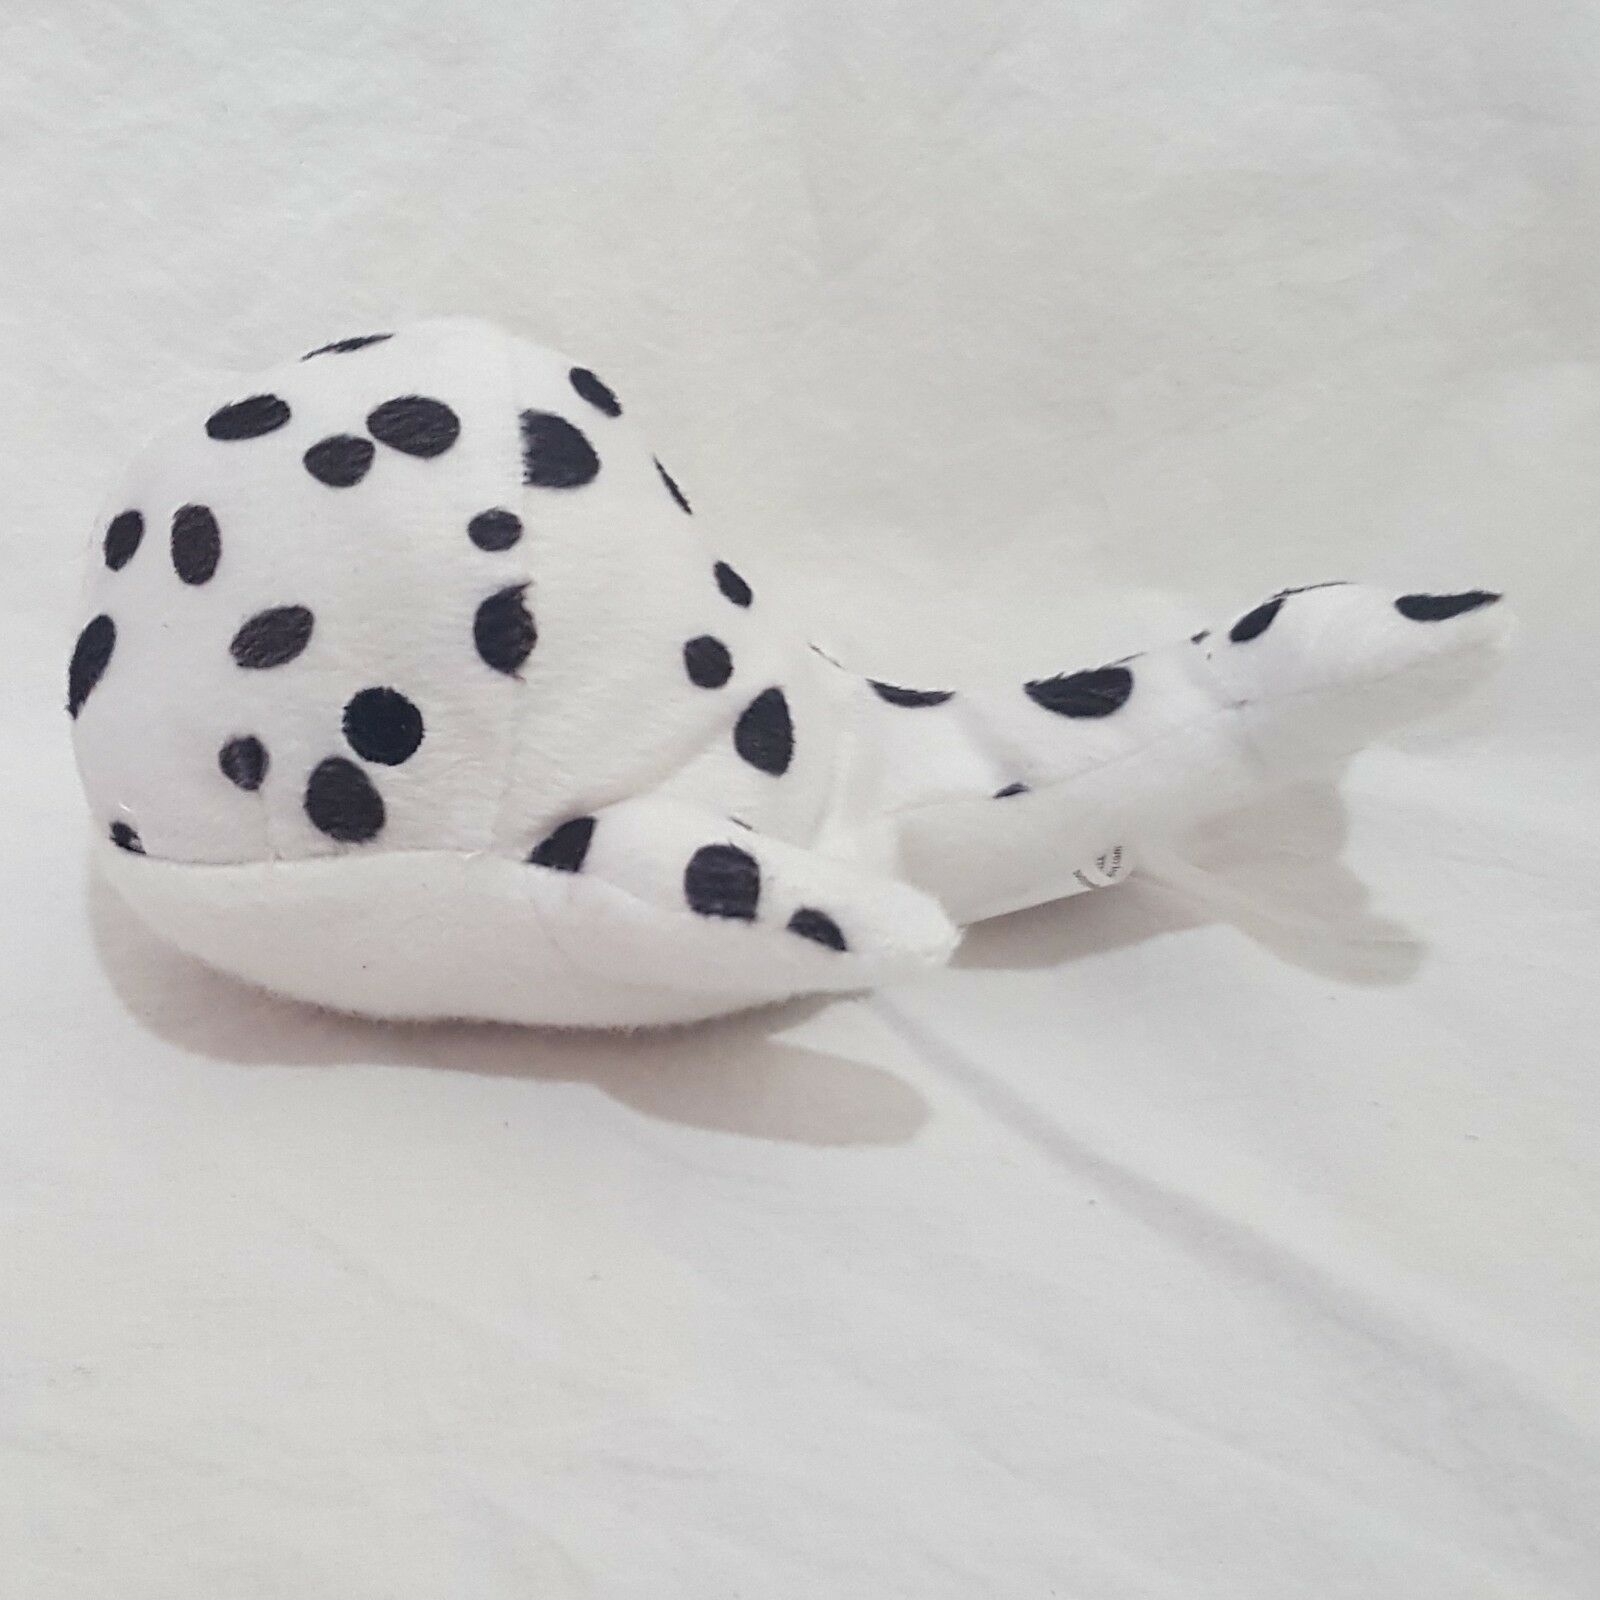 Whale White Black Spotted Plush Stuffed Animal 3" Polka Dot  Kelly Toy 2016 - $16.56